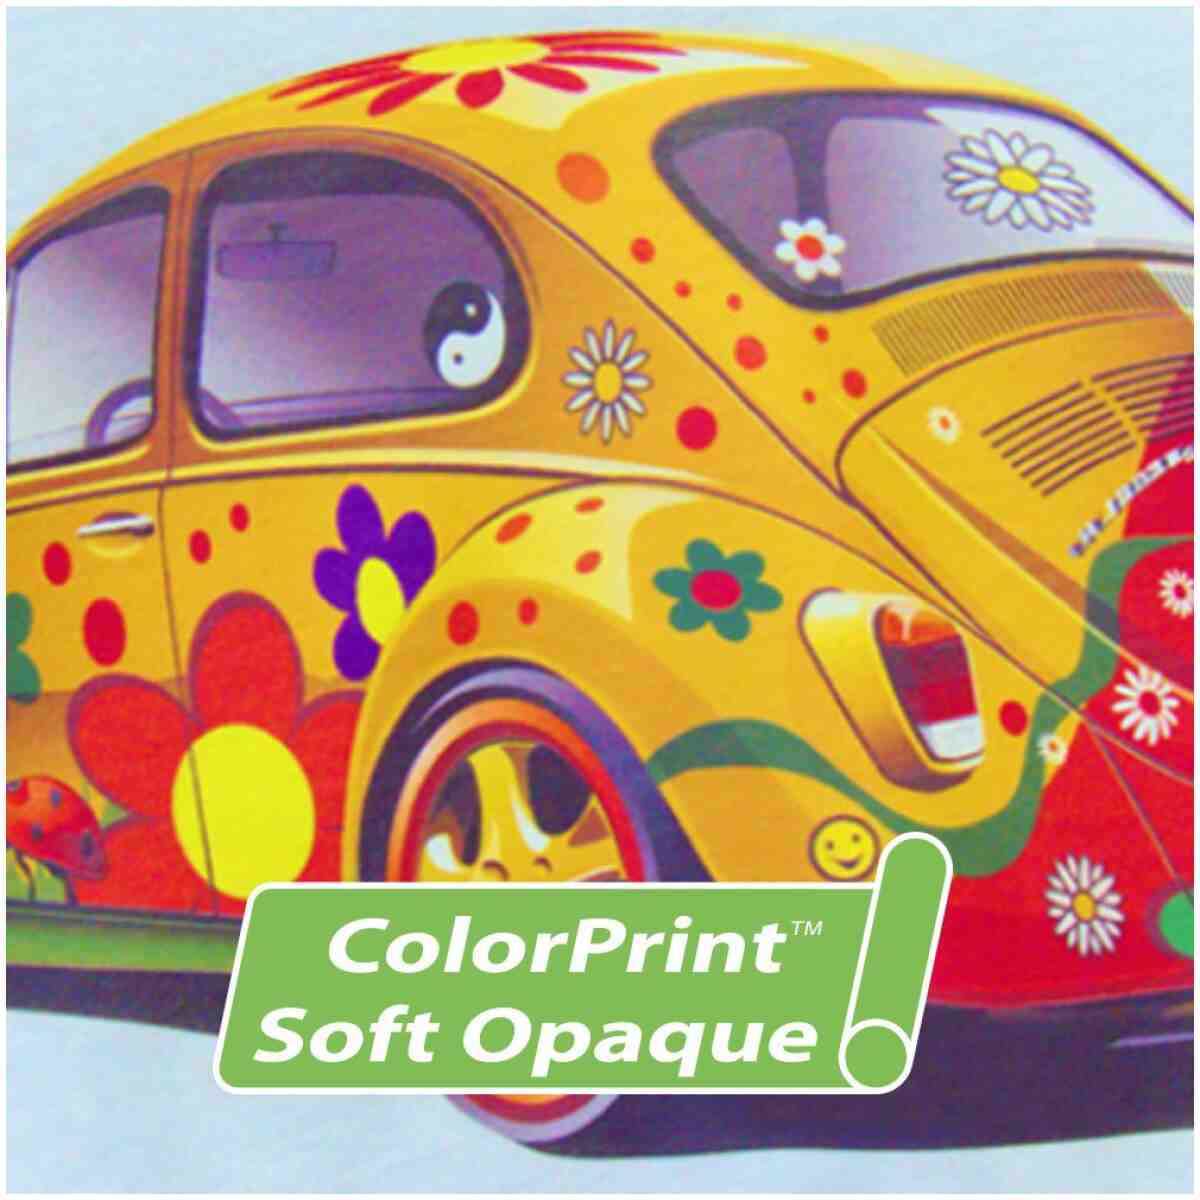 Colorprint™ Soft Opaque Print & Cut Digital Media (Htv) 54" - 25 Yard Roll SISER®